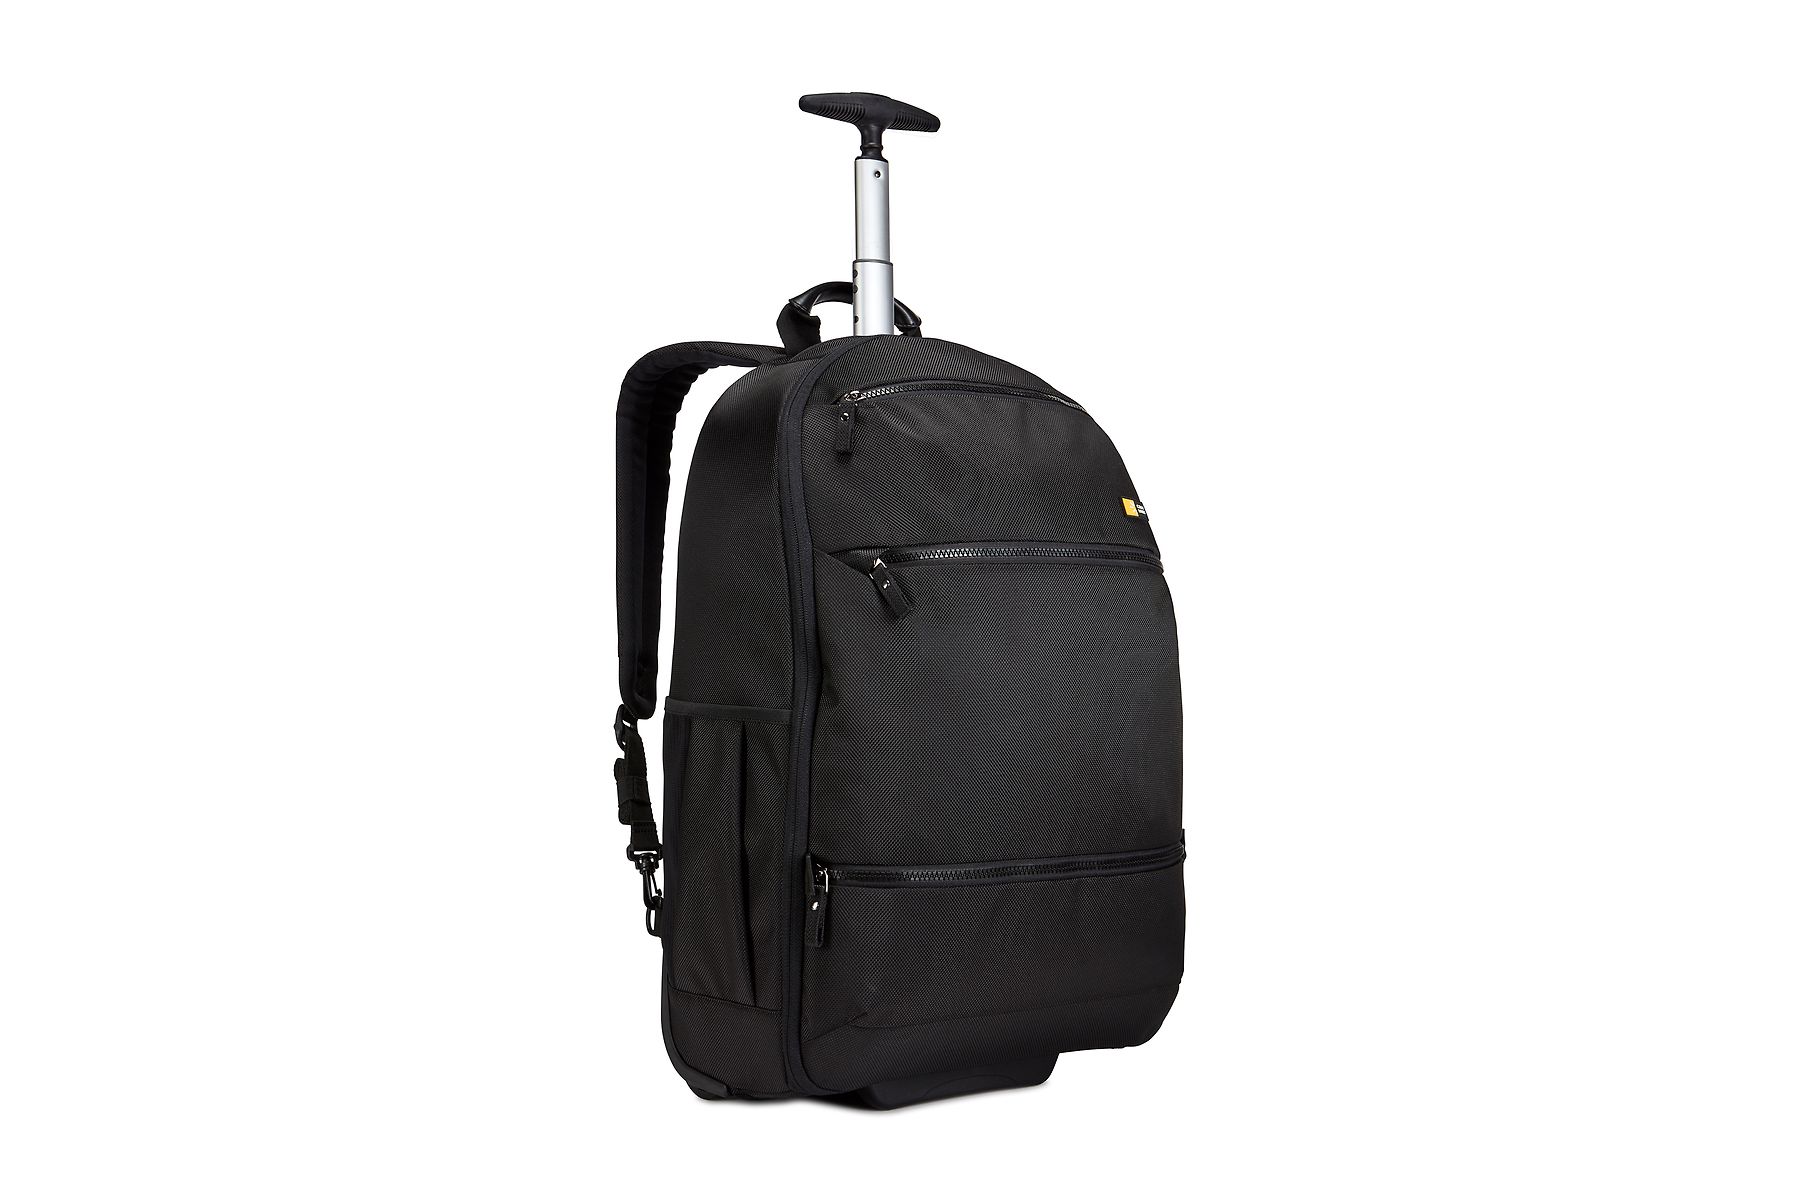 Case Logic Bryker Backpack Roller - laptop bag with telescope handle